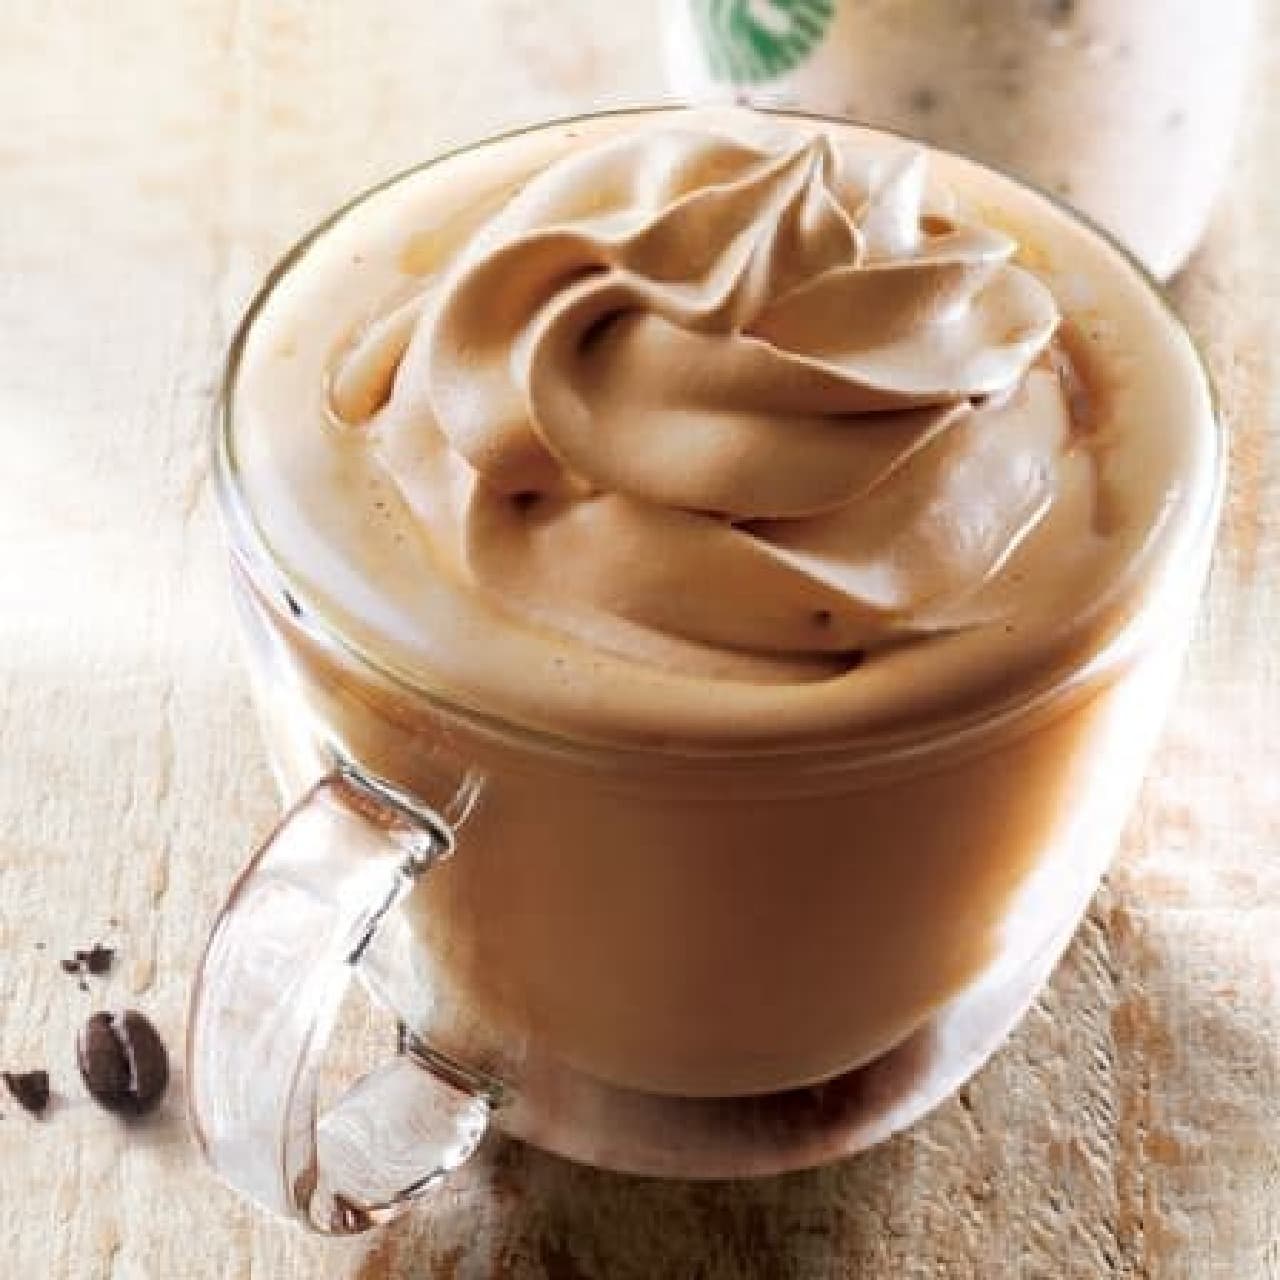 Starbucks "Coffee & Cream Latte"